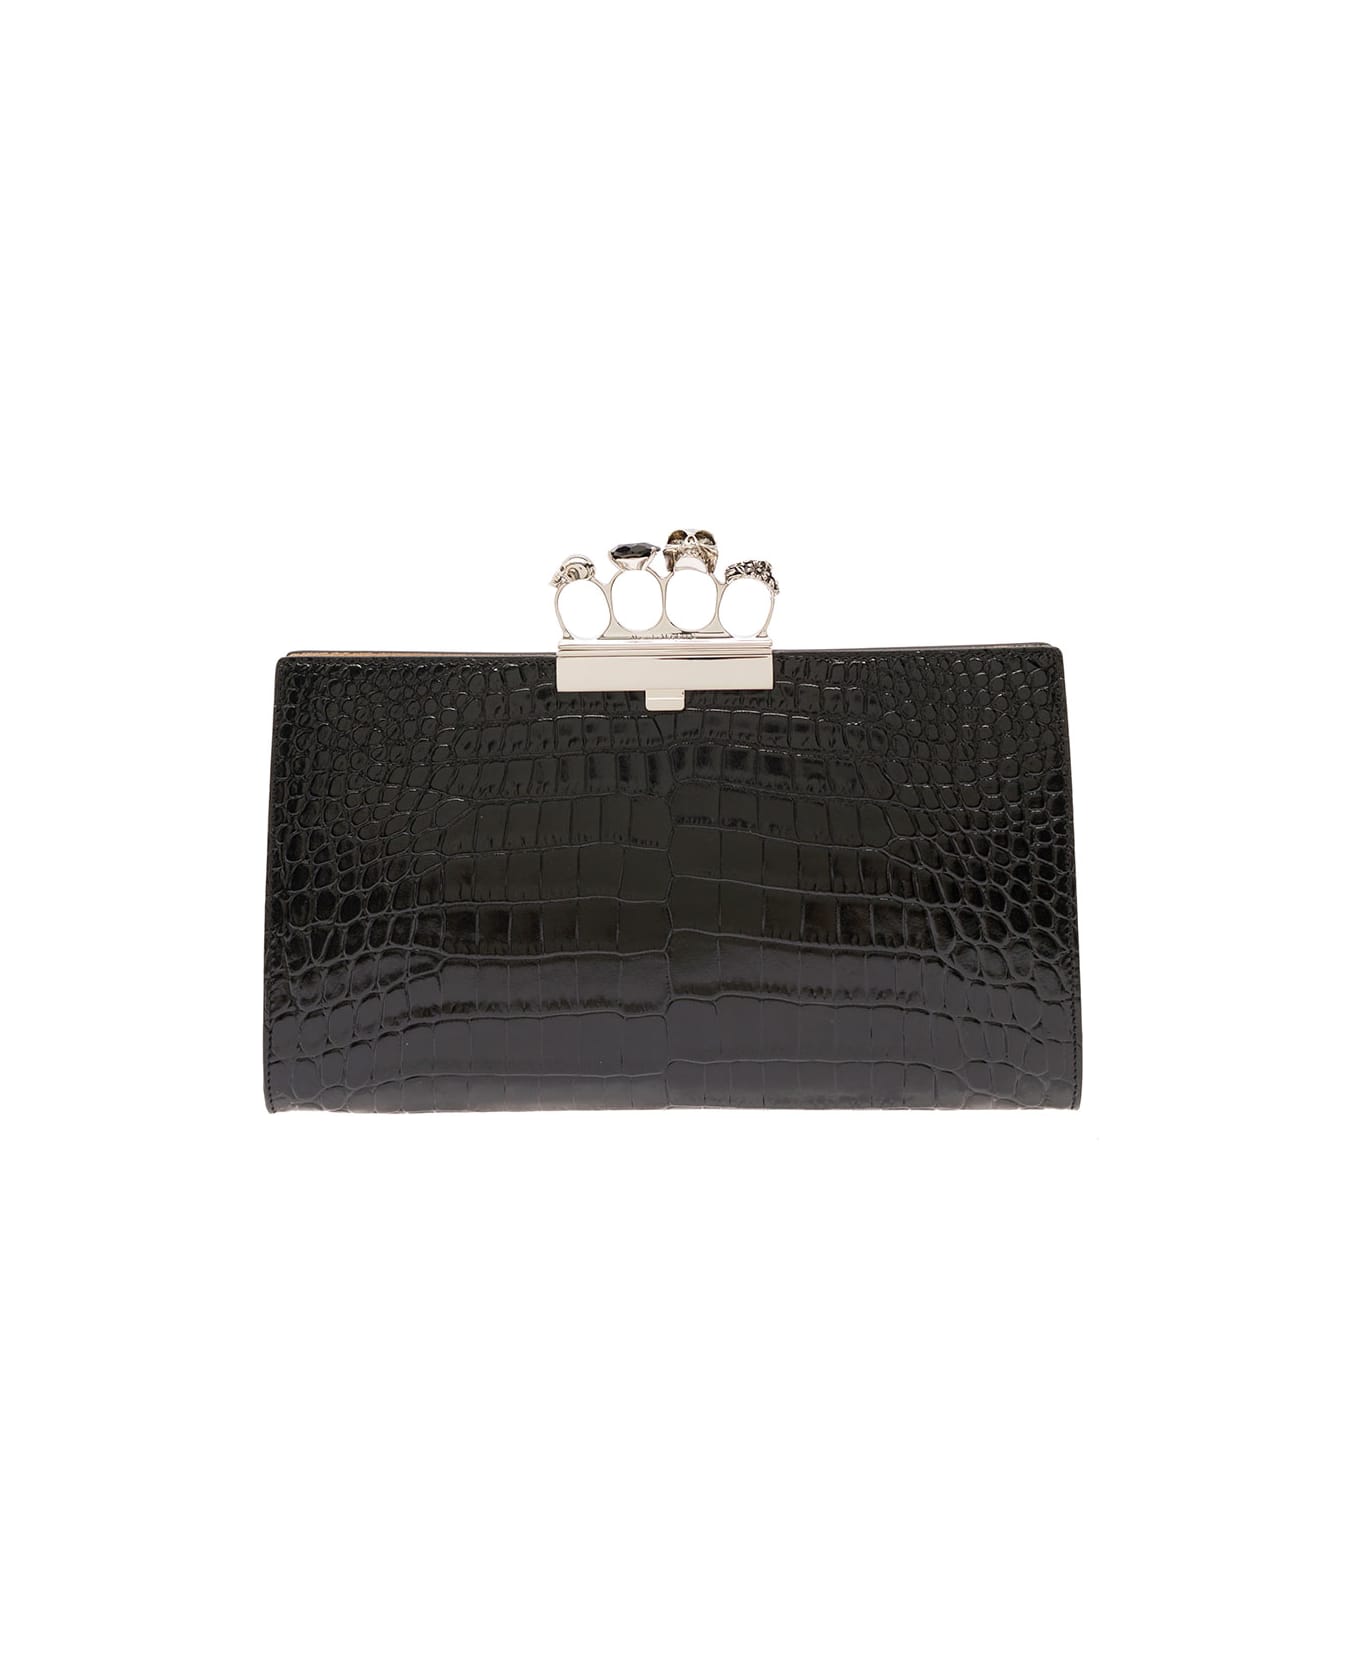 Alexander McQueen Black Crocodile Printed Leather Handbag With Fuor Ring Detail Alexander Mcqueen Woman - Black